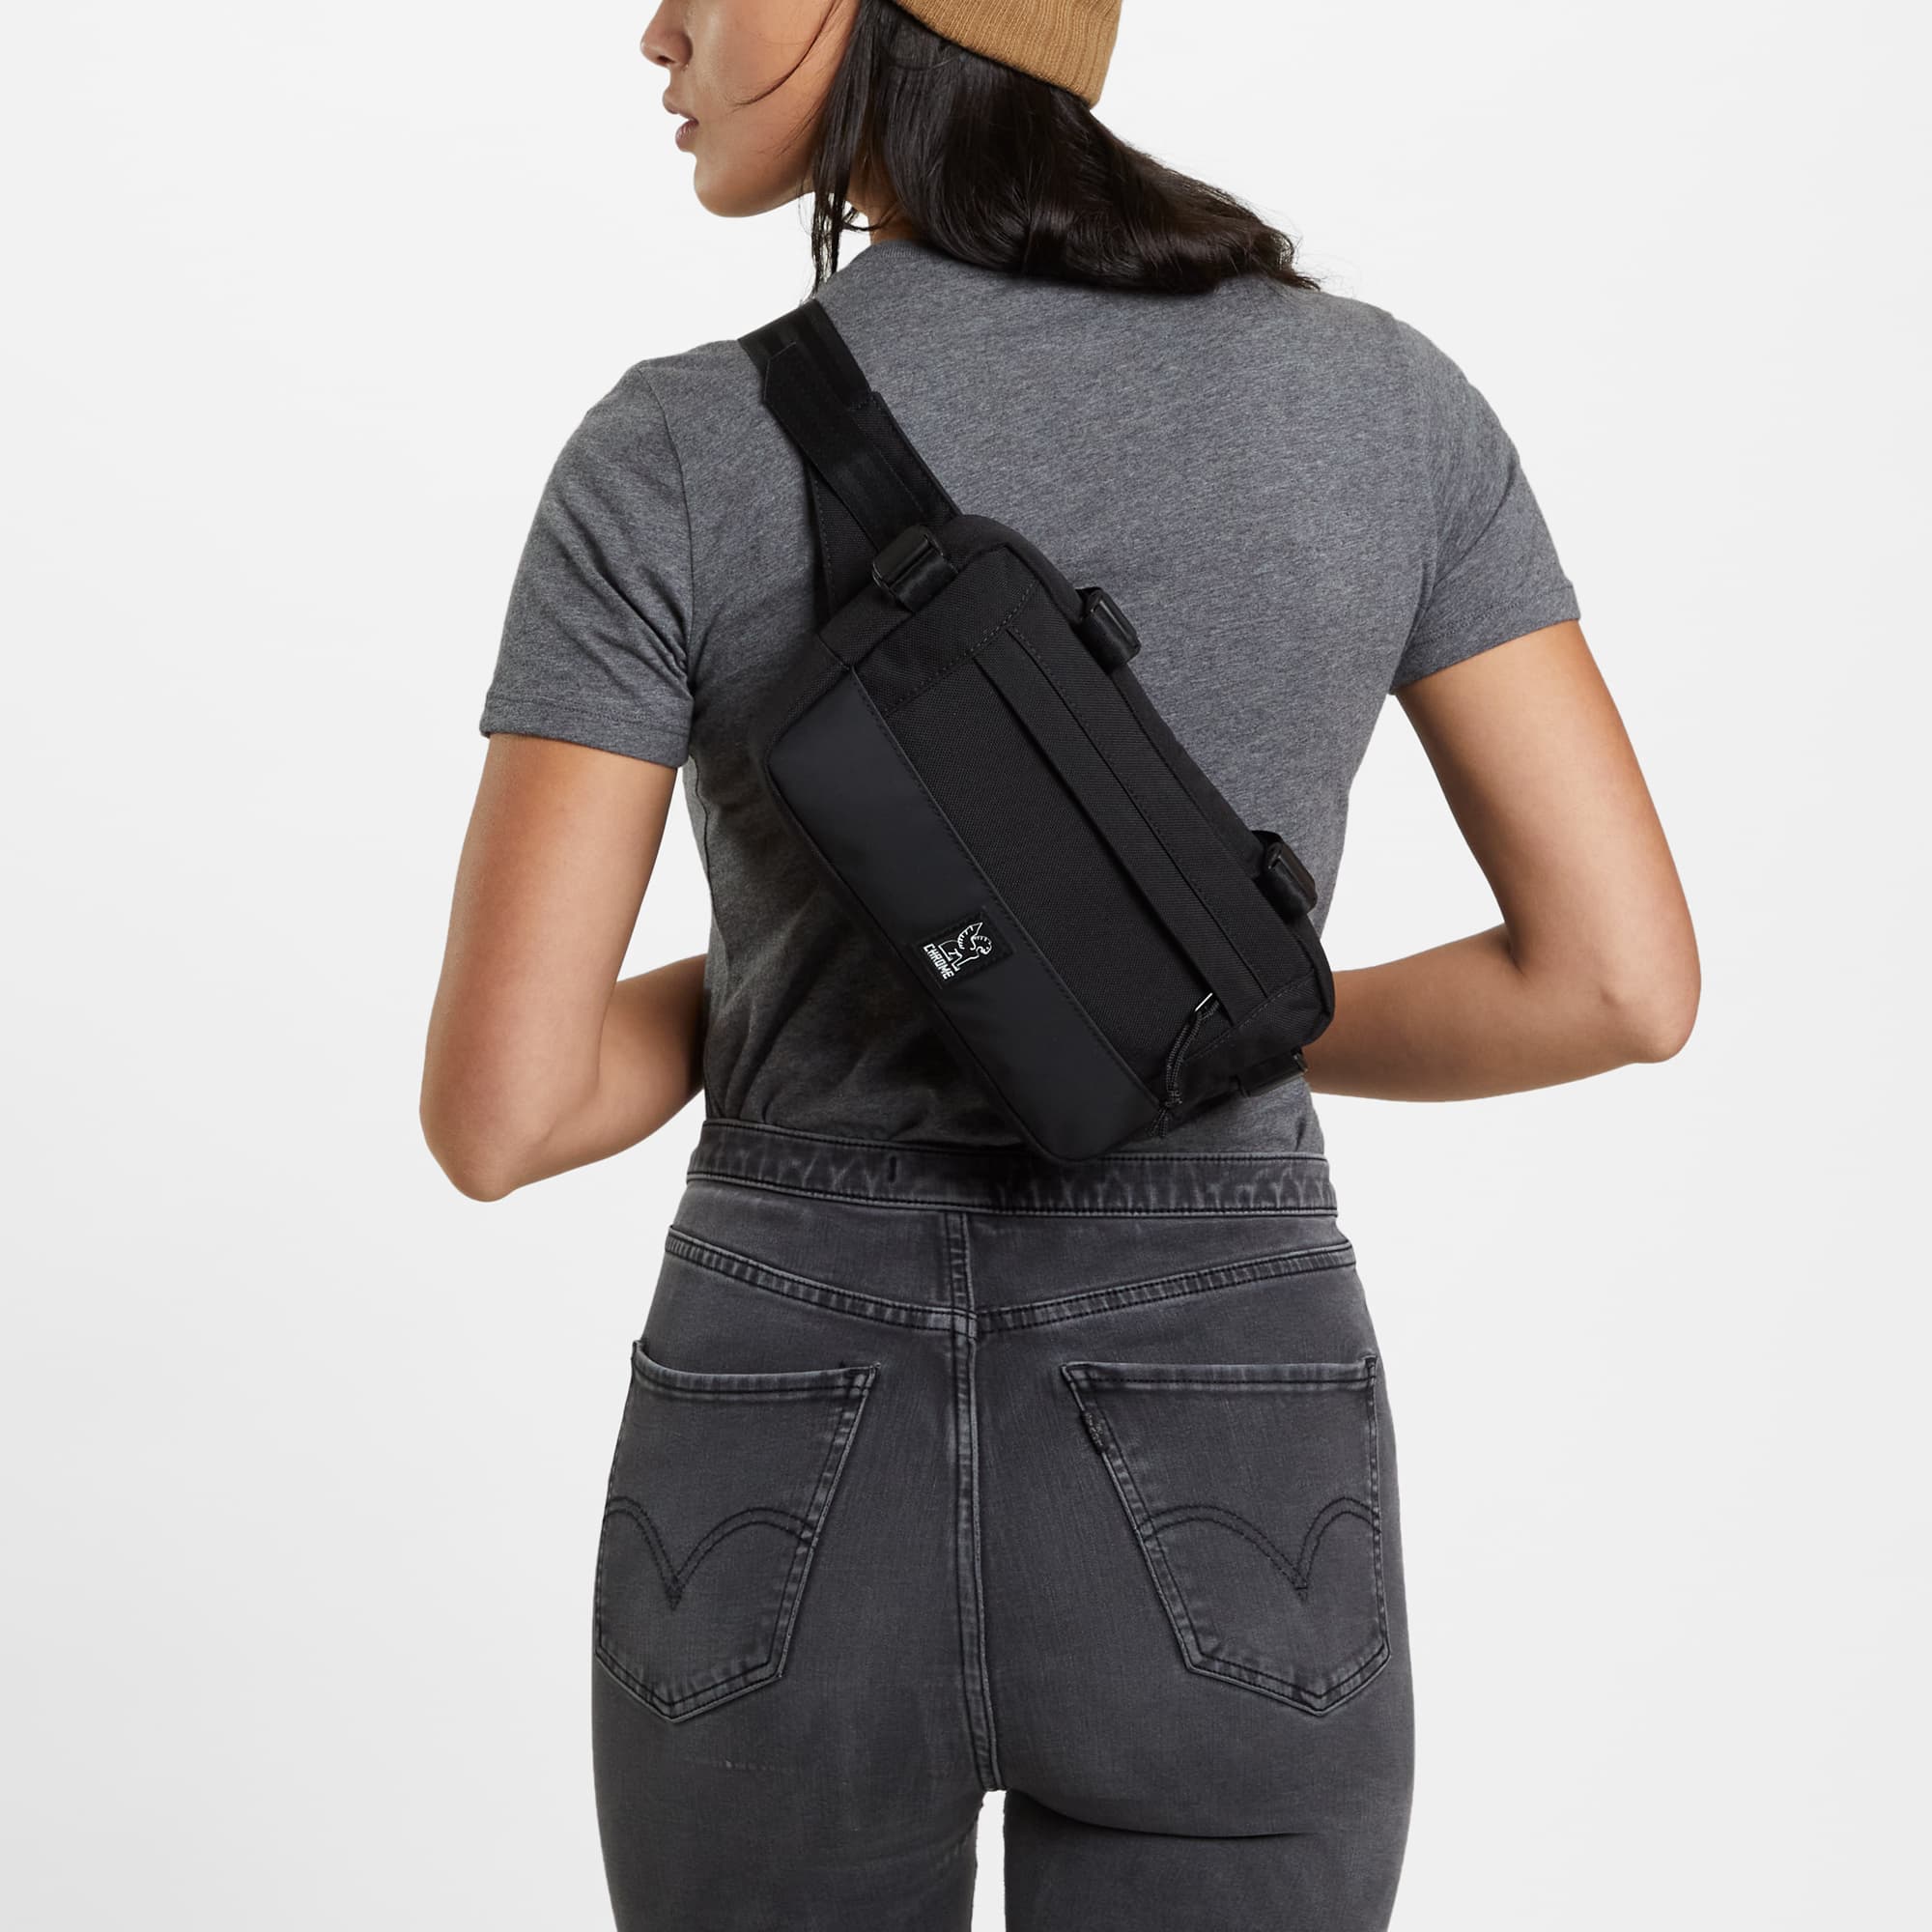 2L Doubletrack Frame Bag in black worn as a sling